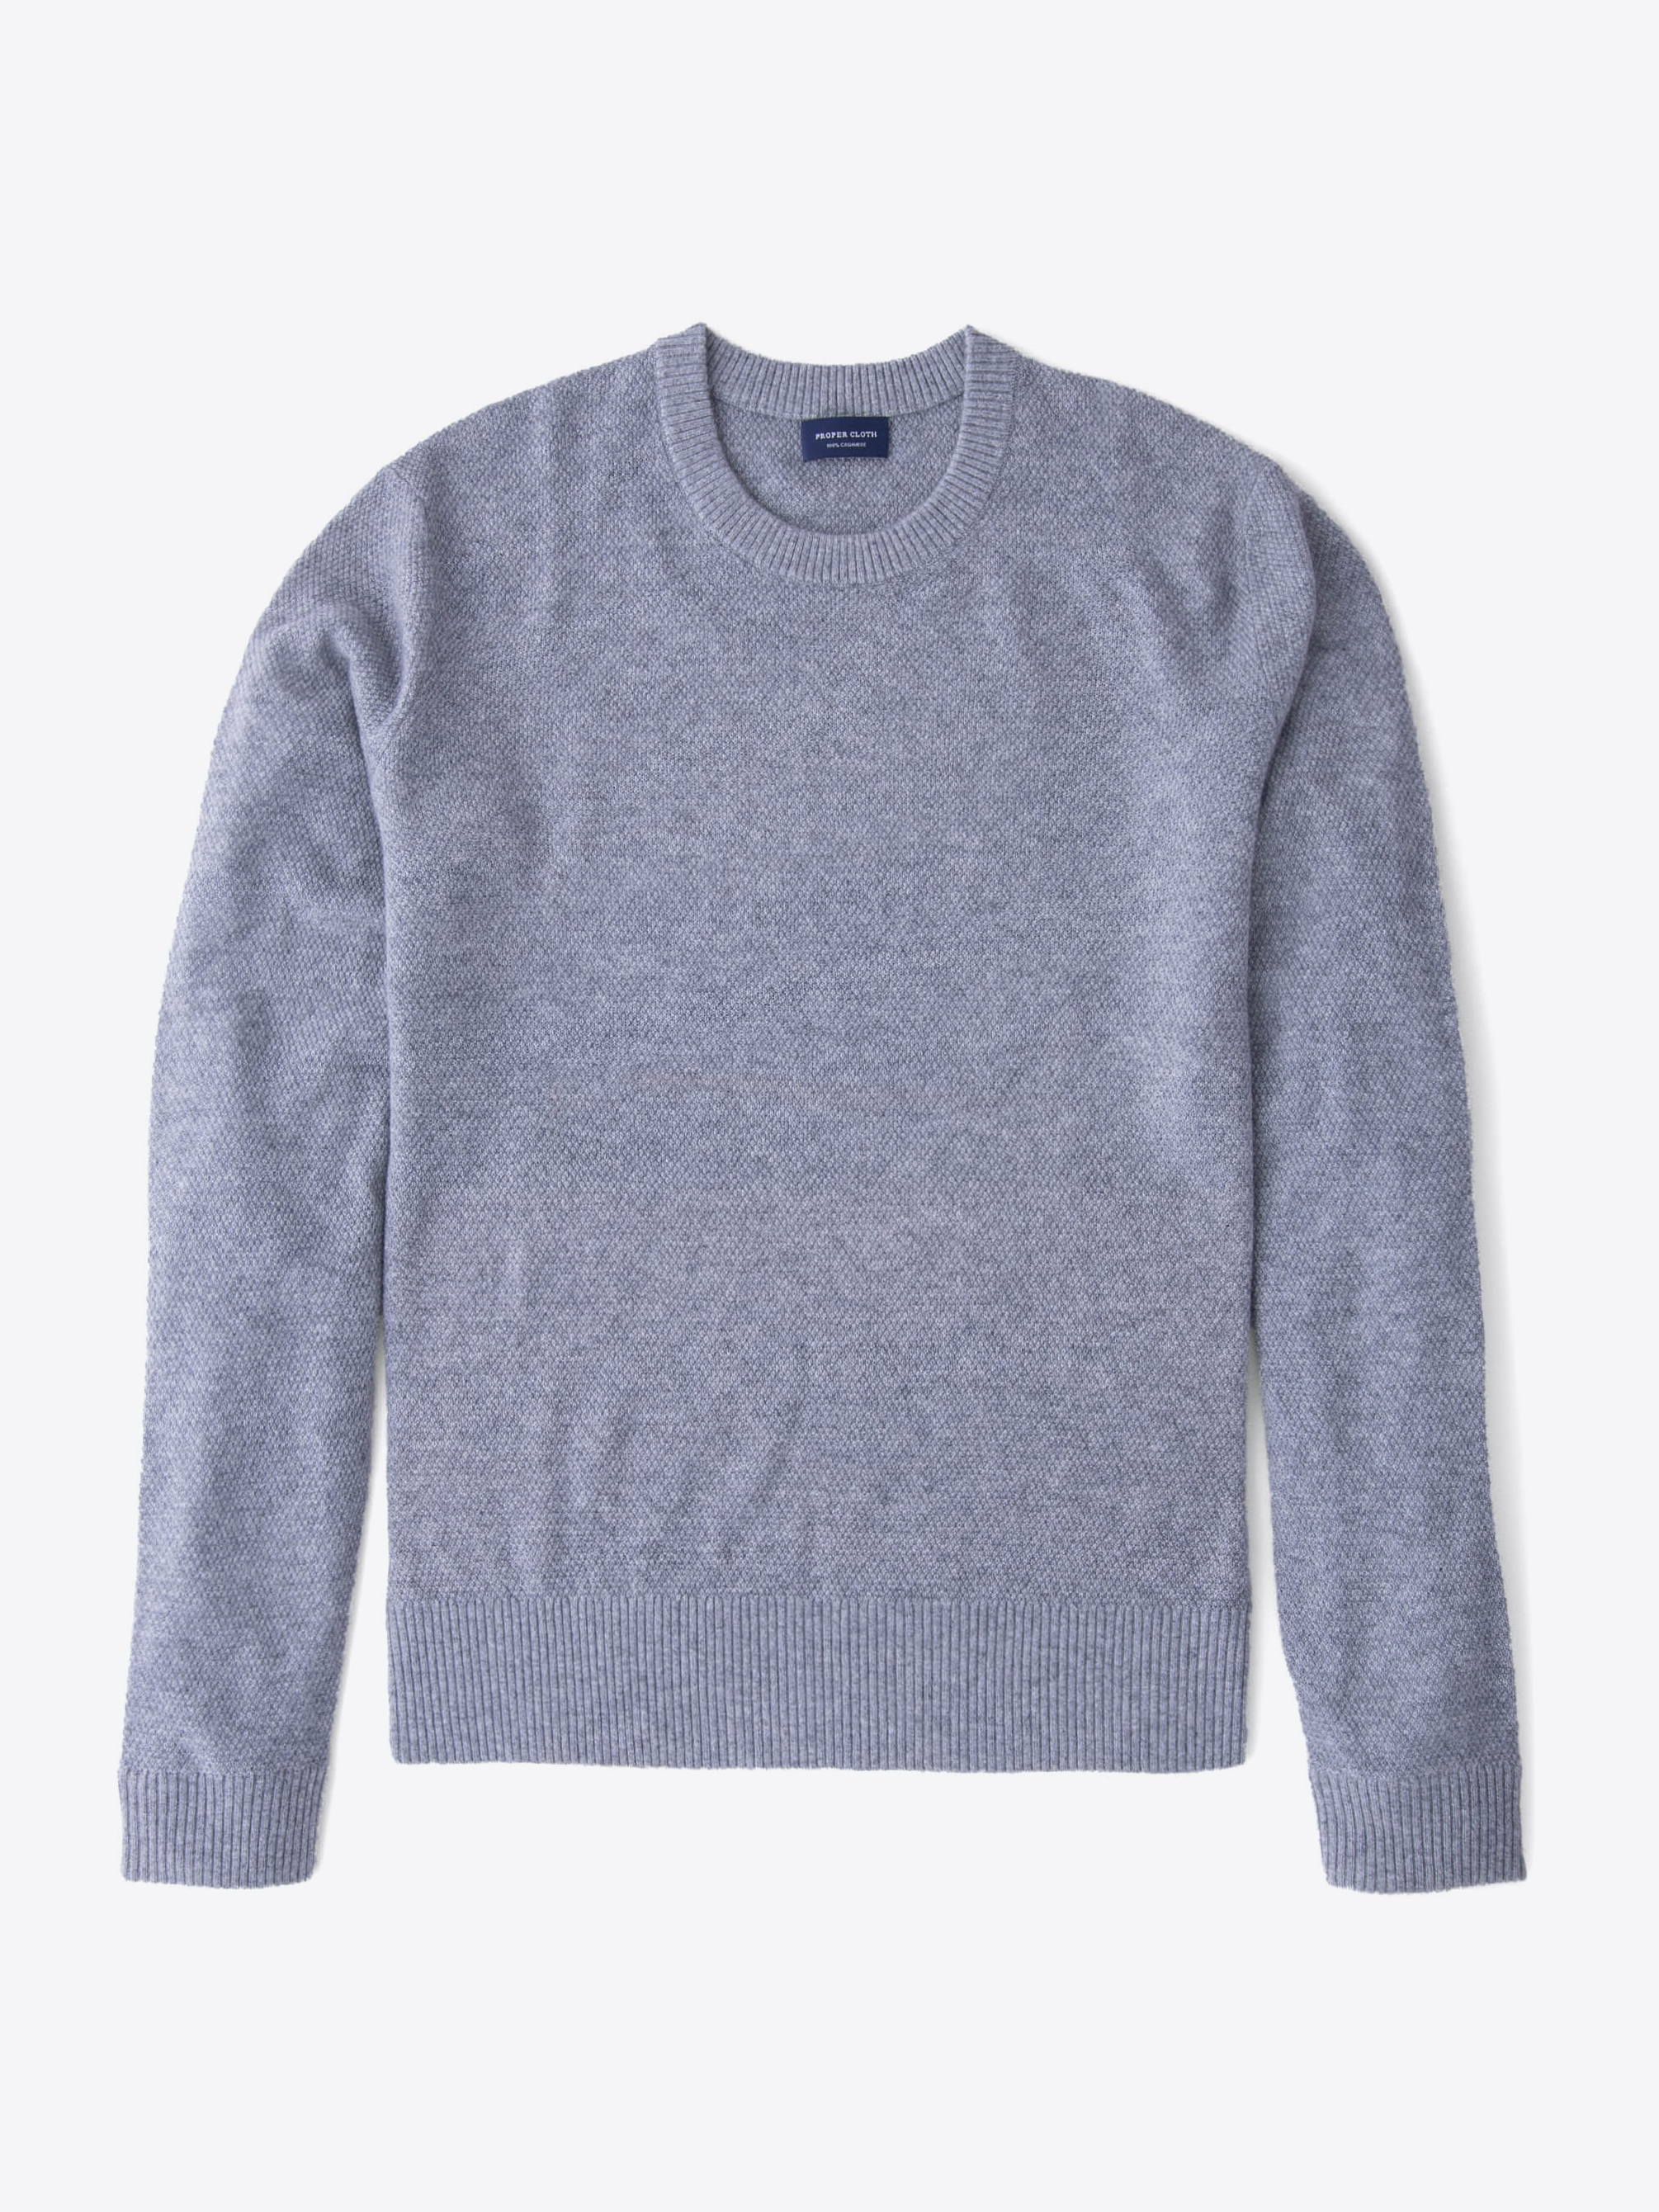 Zoom Image of Light Grey Cobble Stitch Cashmere Crewneck Sweater